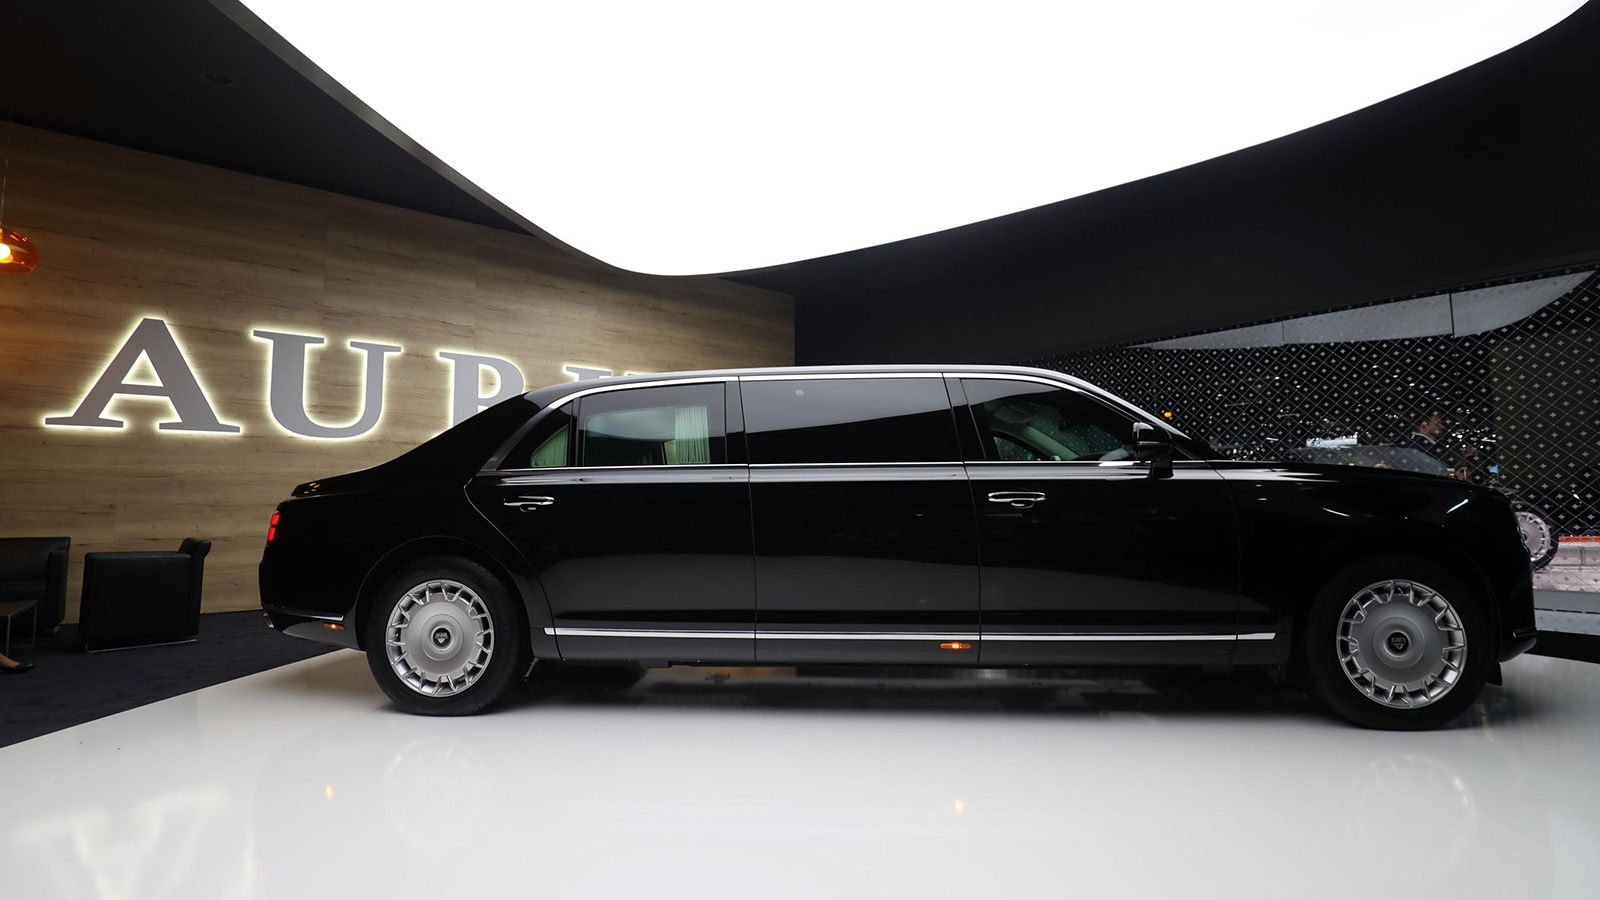 The Aurus experiment: Russia's Rolls-Royce makes Geneva debut